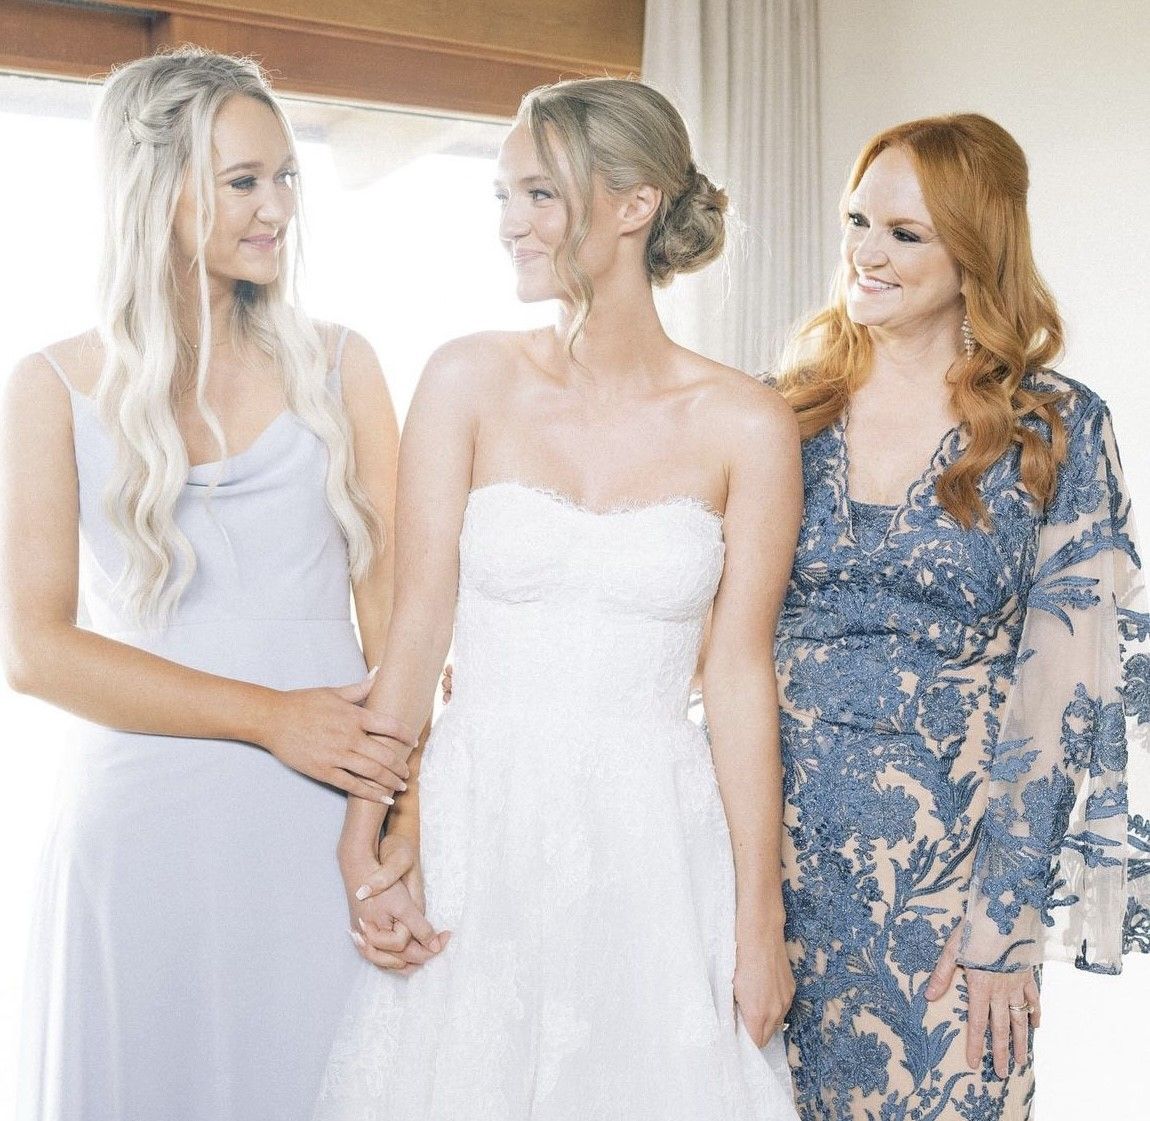 2021 New Wedding Hairstyles for Brides and Flower Girls – Stylish Wedd Blog